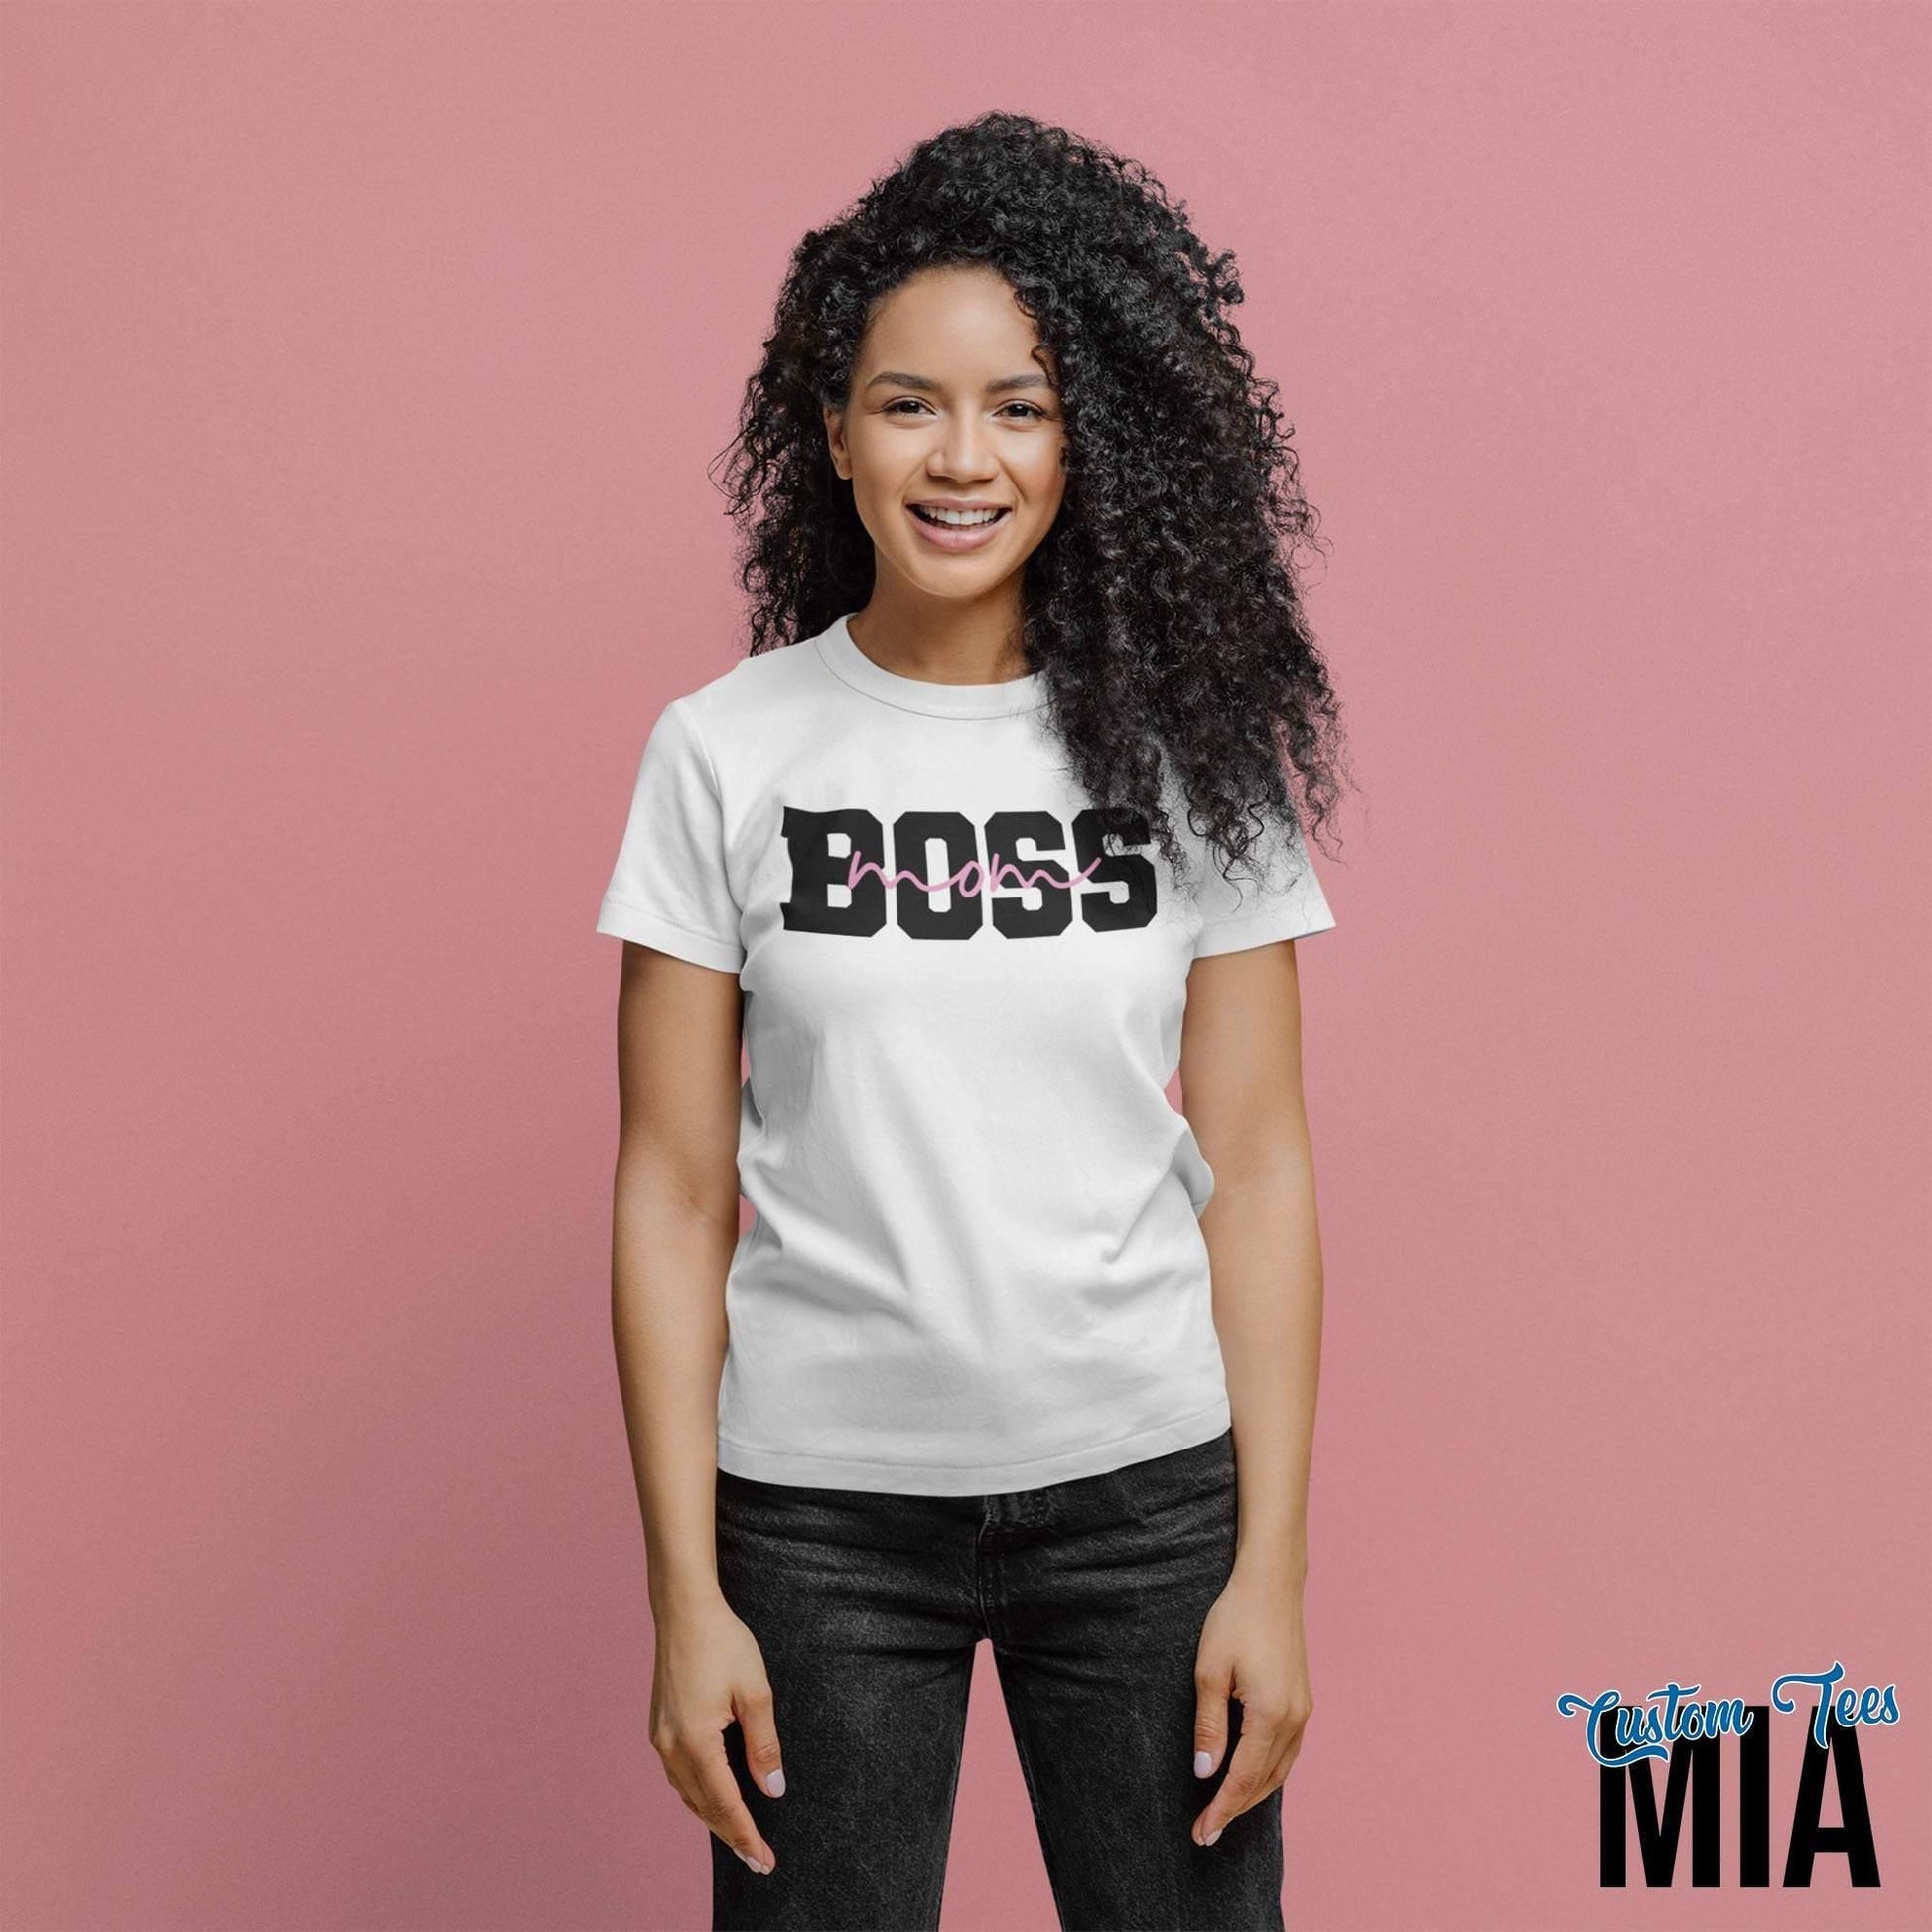 Boss Mom Shirt - Custom Tees MIA